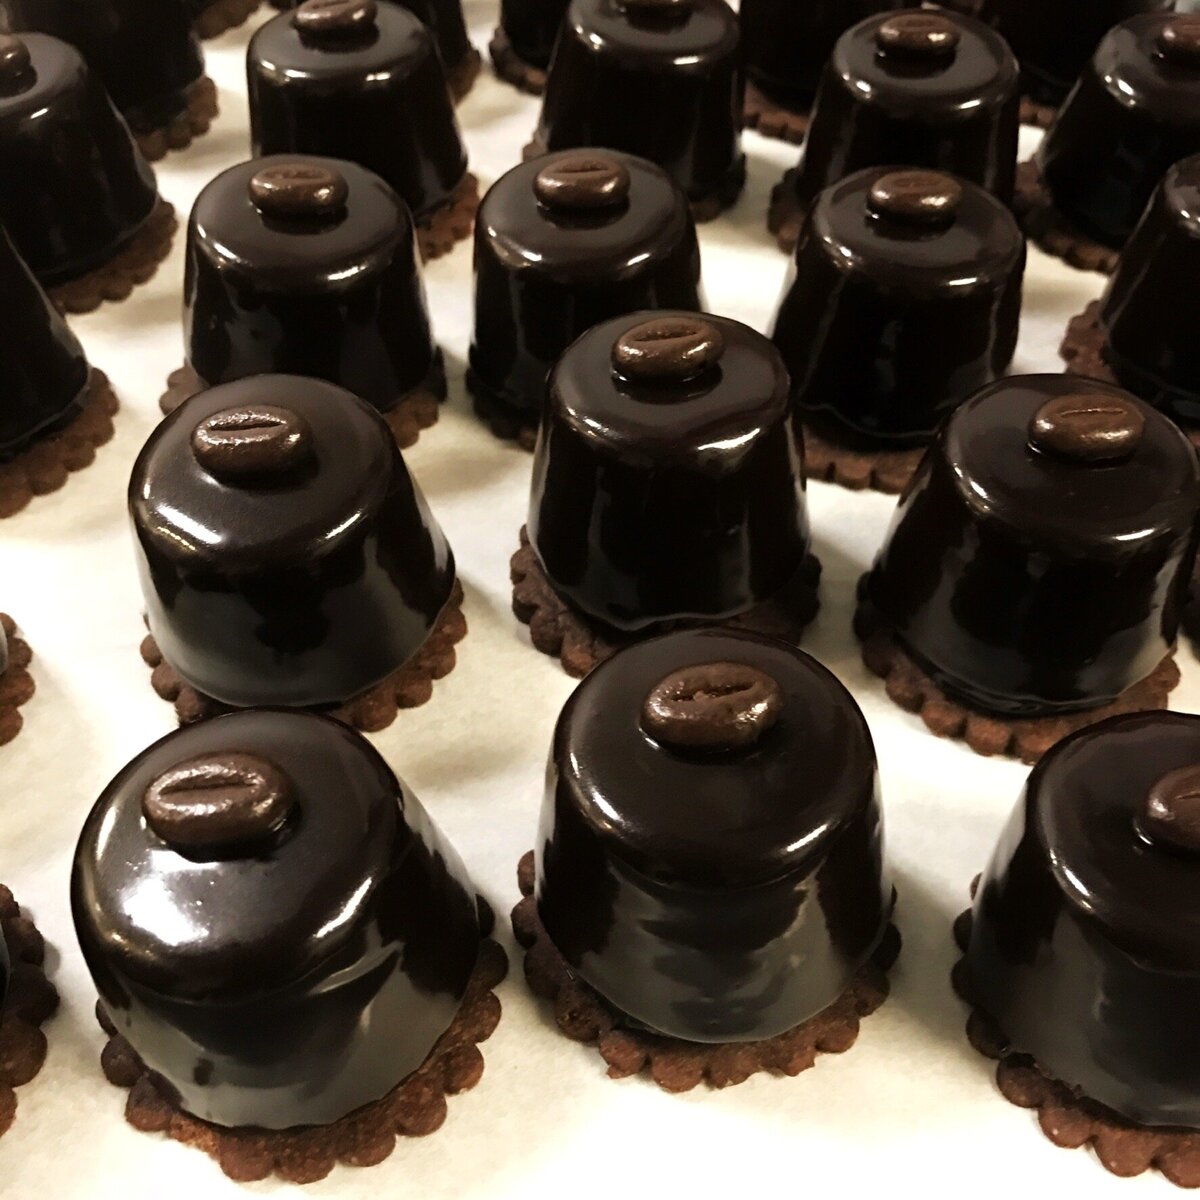 Mini coffee and chocolate petits fours with shiny chocolate glaze and espresso  bean